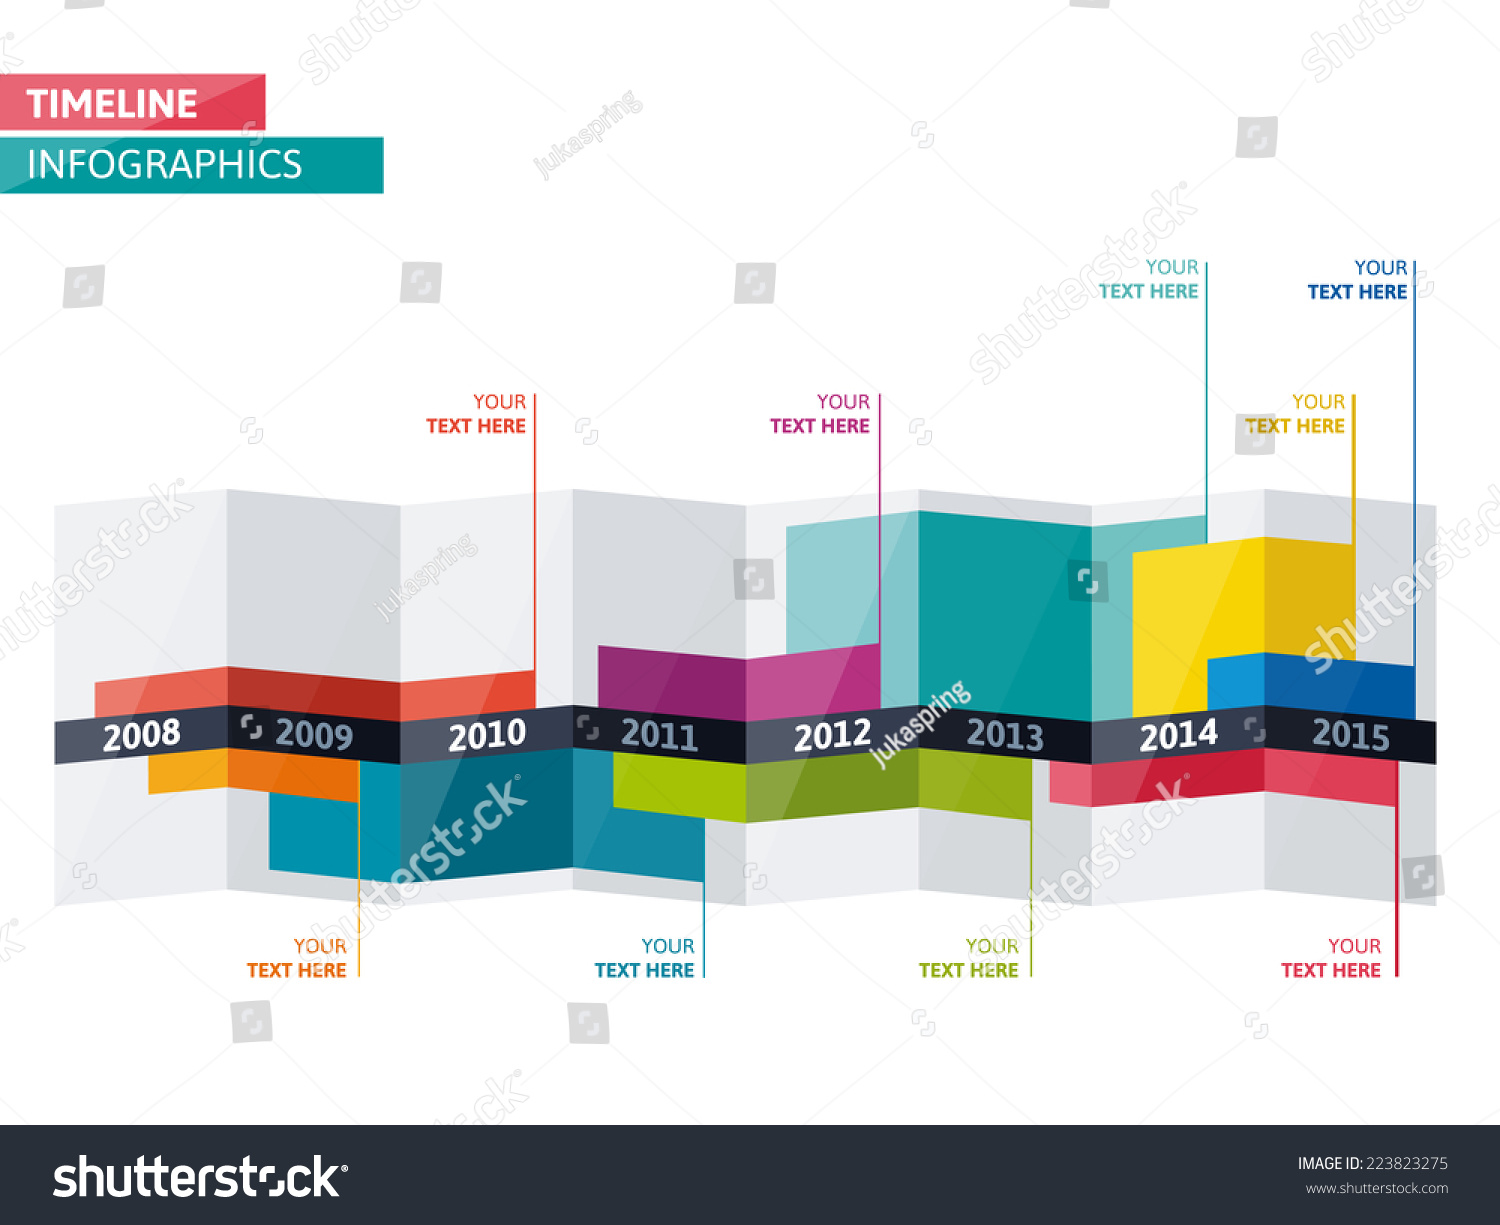 timeline infographic vector cv resume business stock